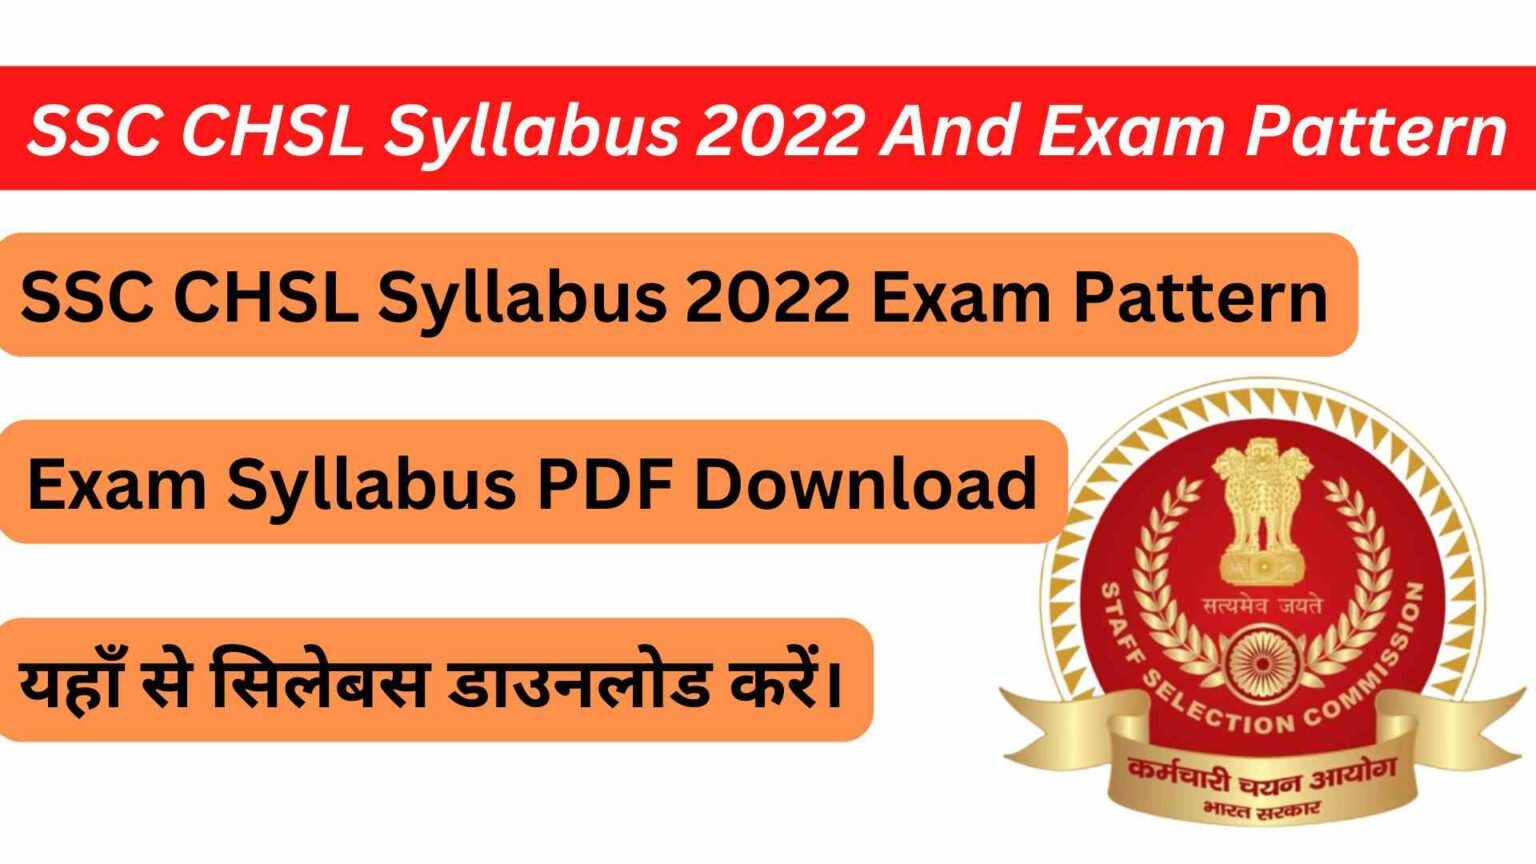 SSC CHSL Exam Pattern & Syllabus Download In PDF 202223